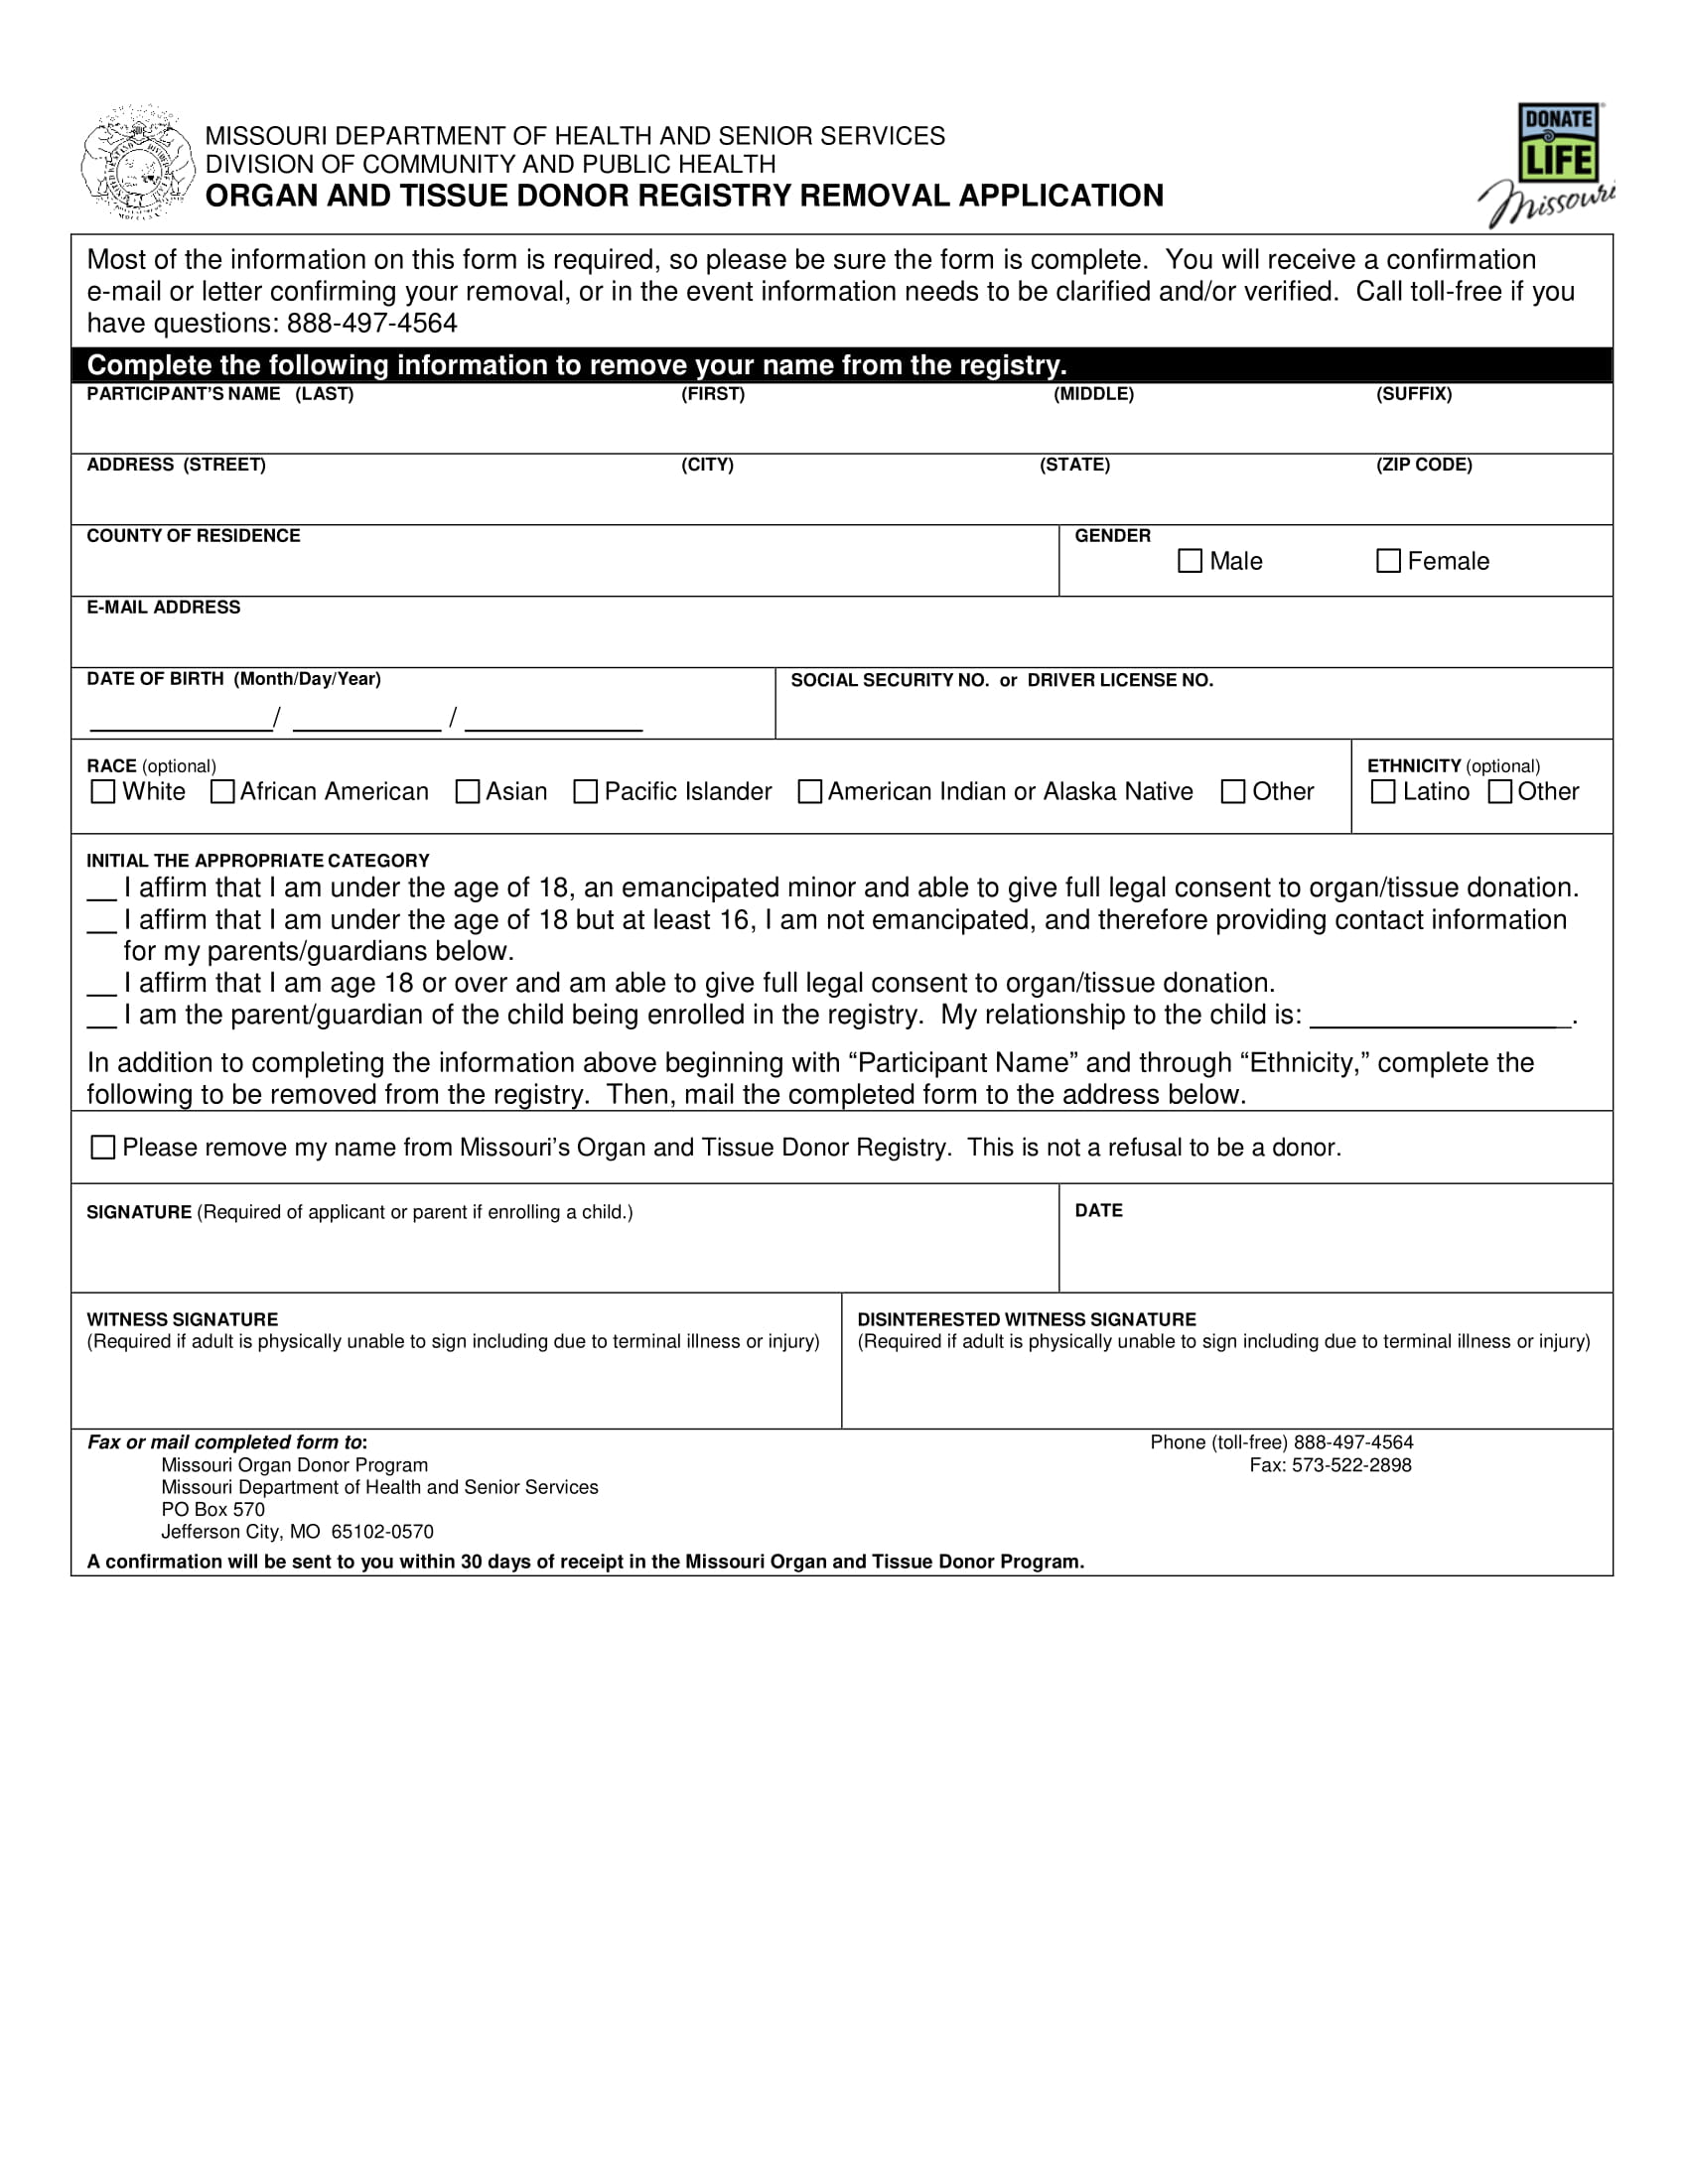 organ donation removal application form 2